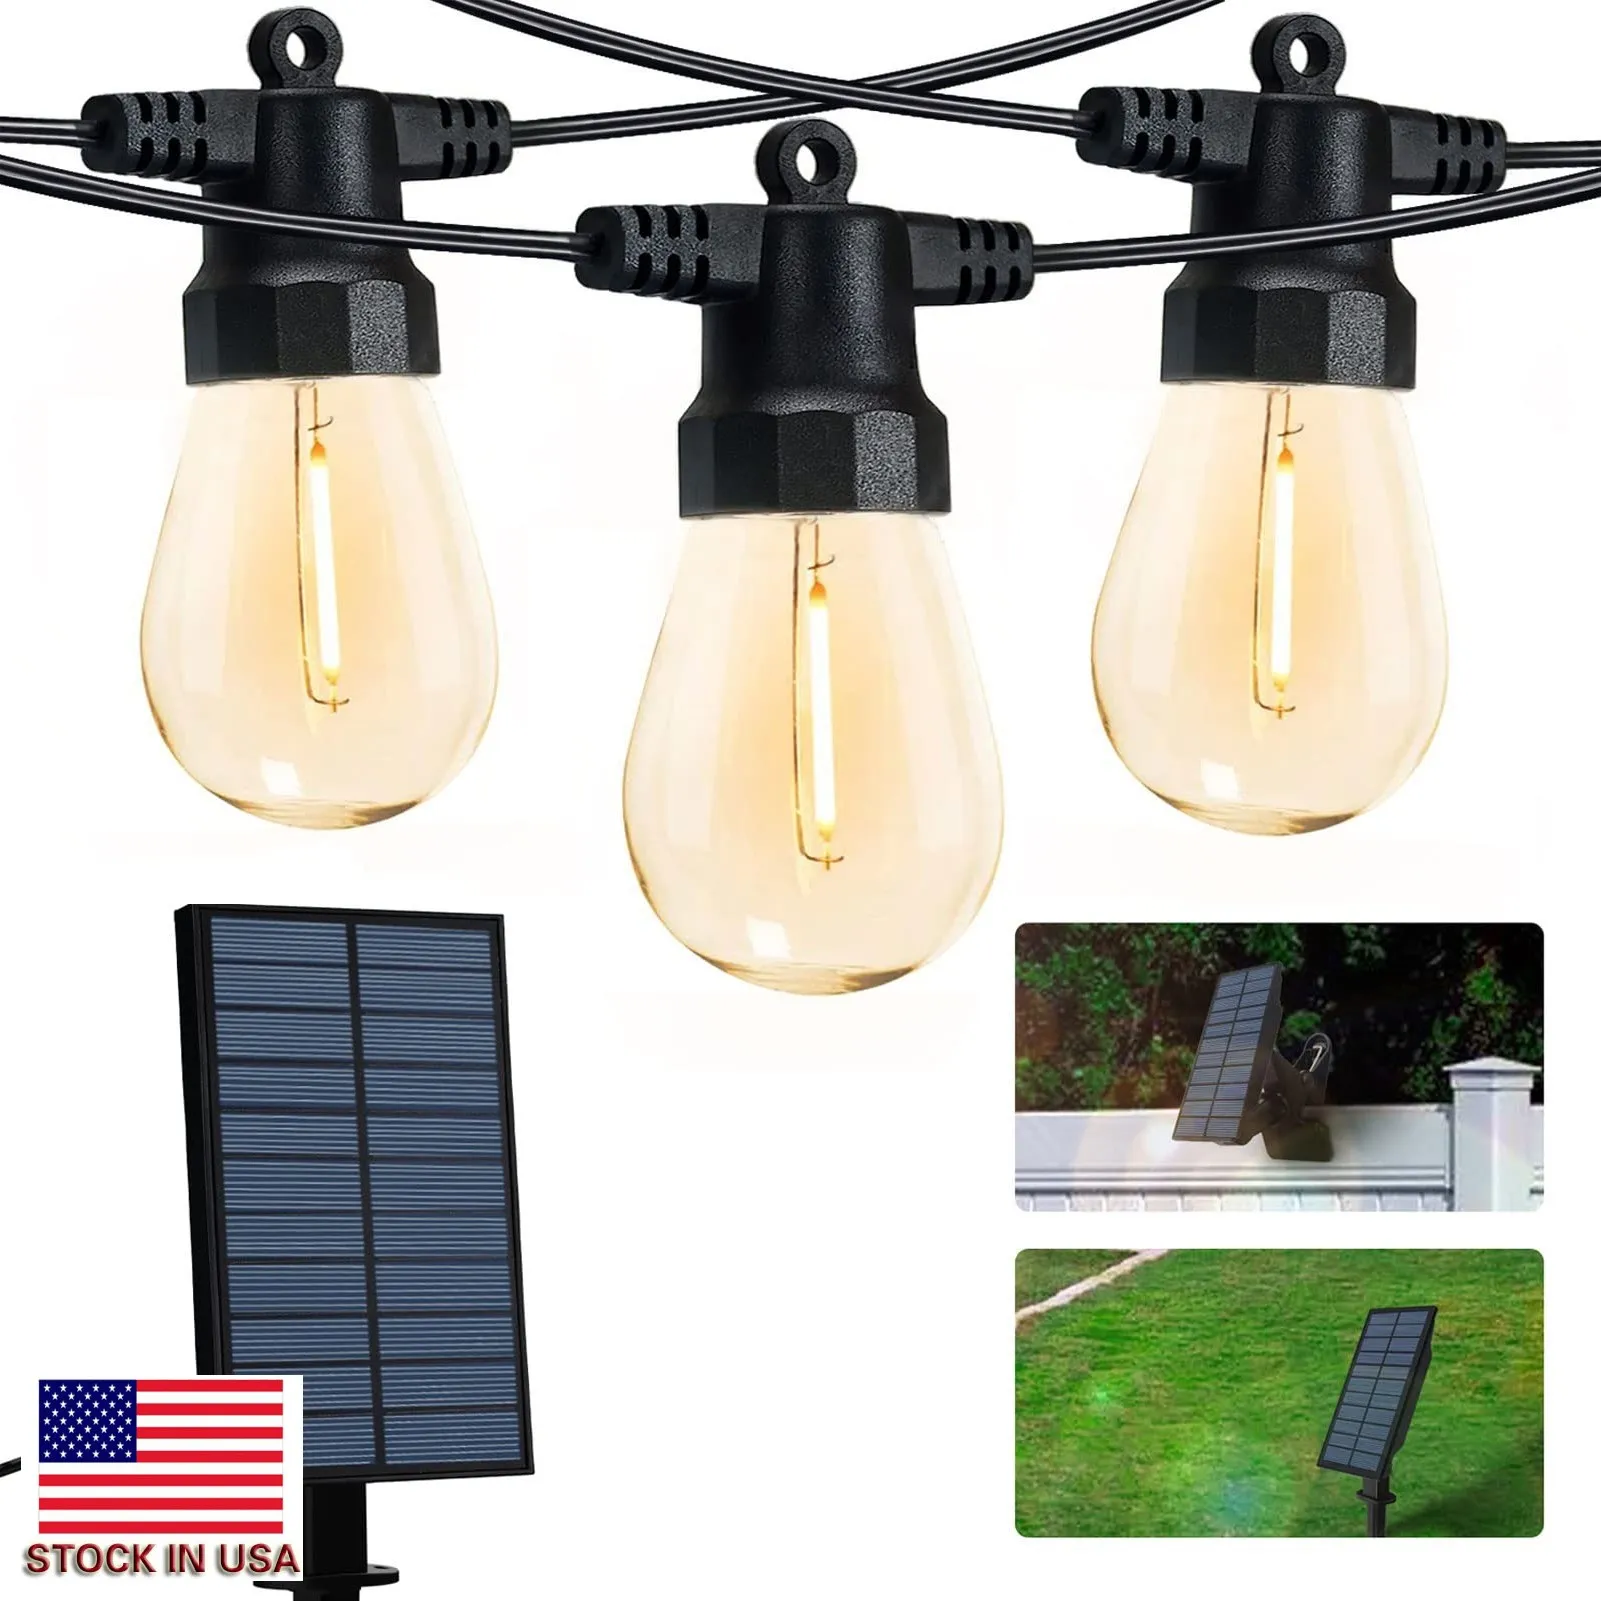 Luces de jardín solar S14 33ft luces de cuerda al aire libre al aire libre Solars Alimentados USB Cargo luz navideña